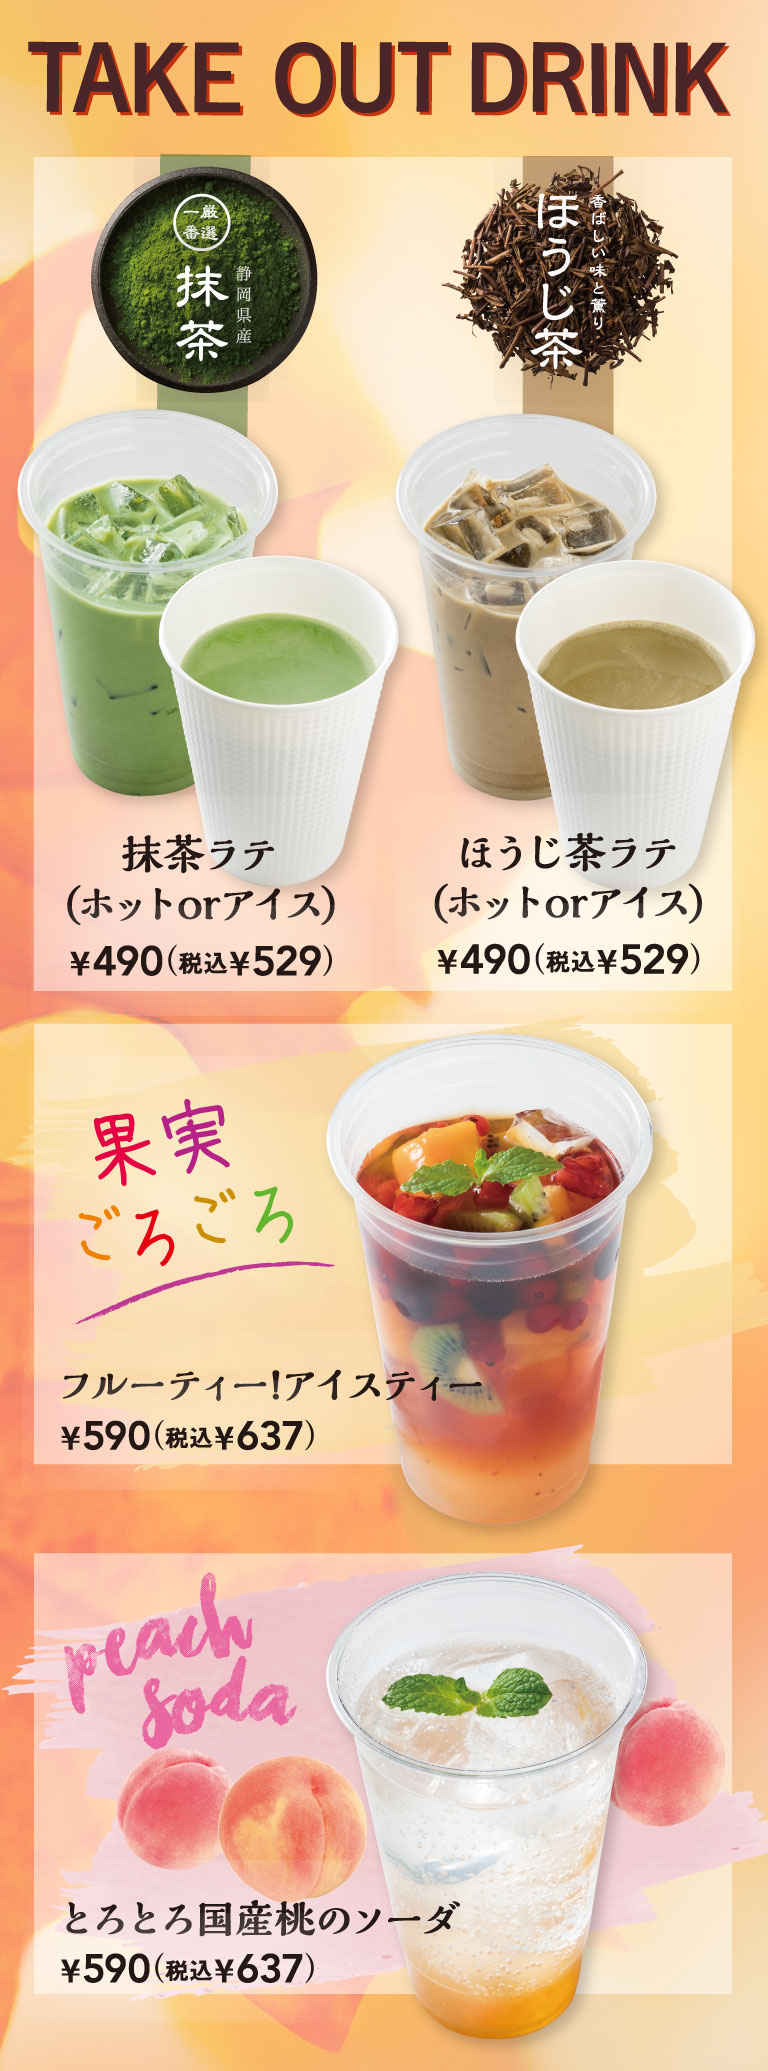 Take-out drinks Take Out latte made with maccya from Shizuoka Prefecture, roasted Green tea latte Hoji tea latte with a fragrant taste and aroma, fruit tea Ice tea, Peach soda (domestic)